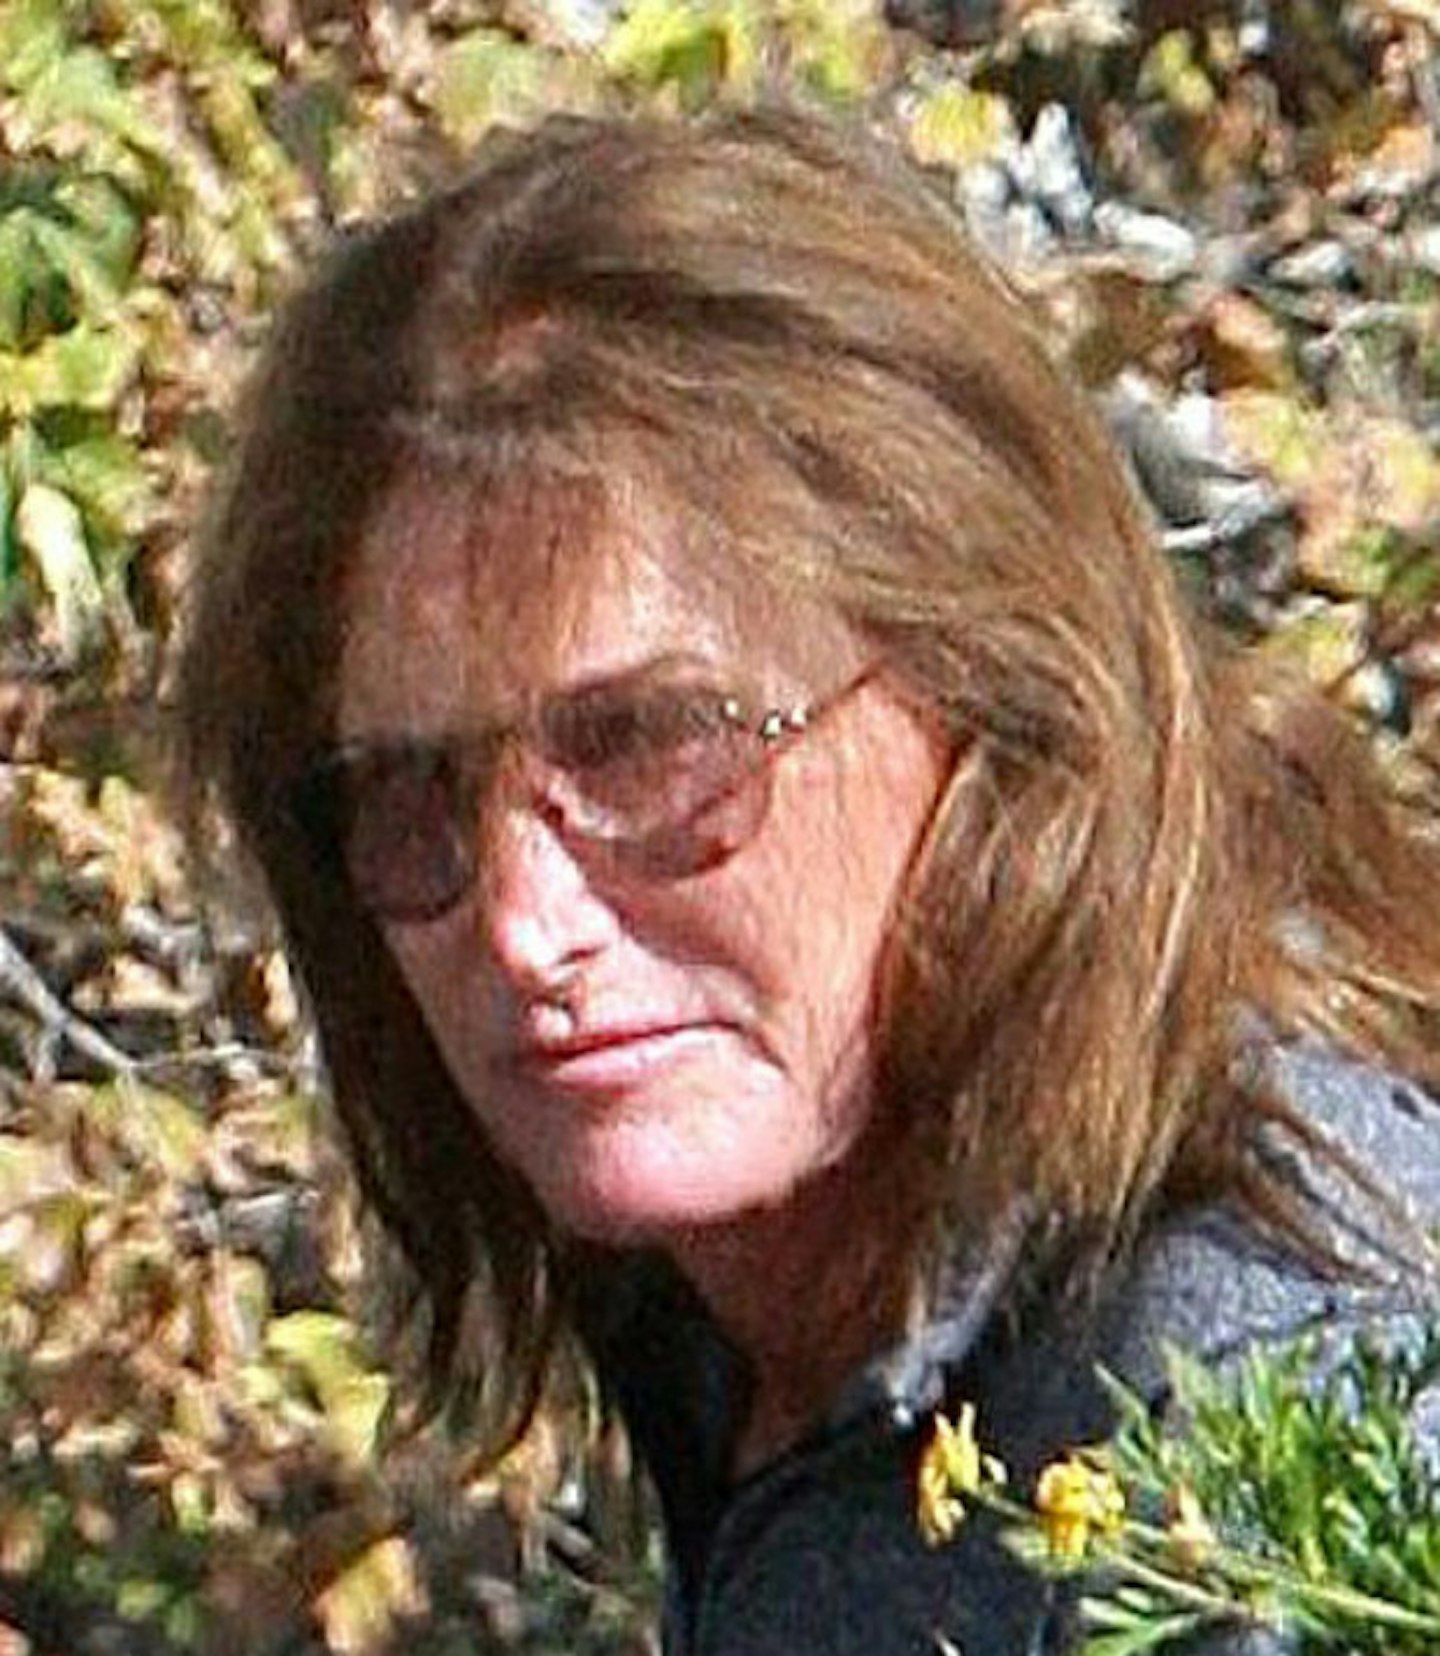 November 2014, aged 65